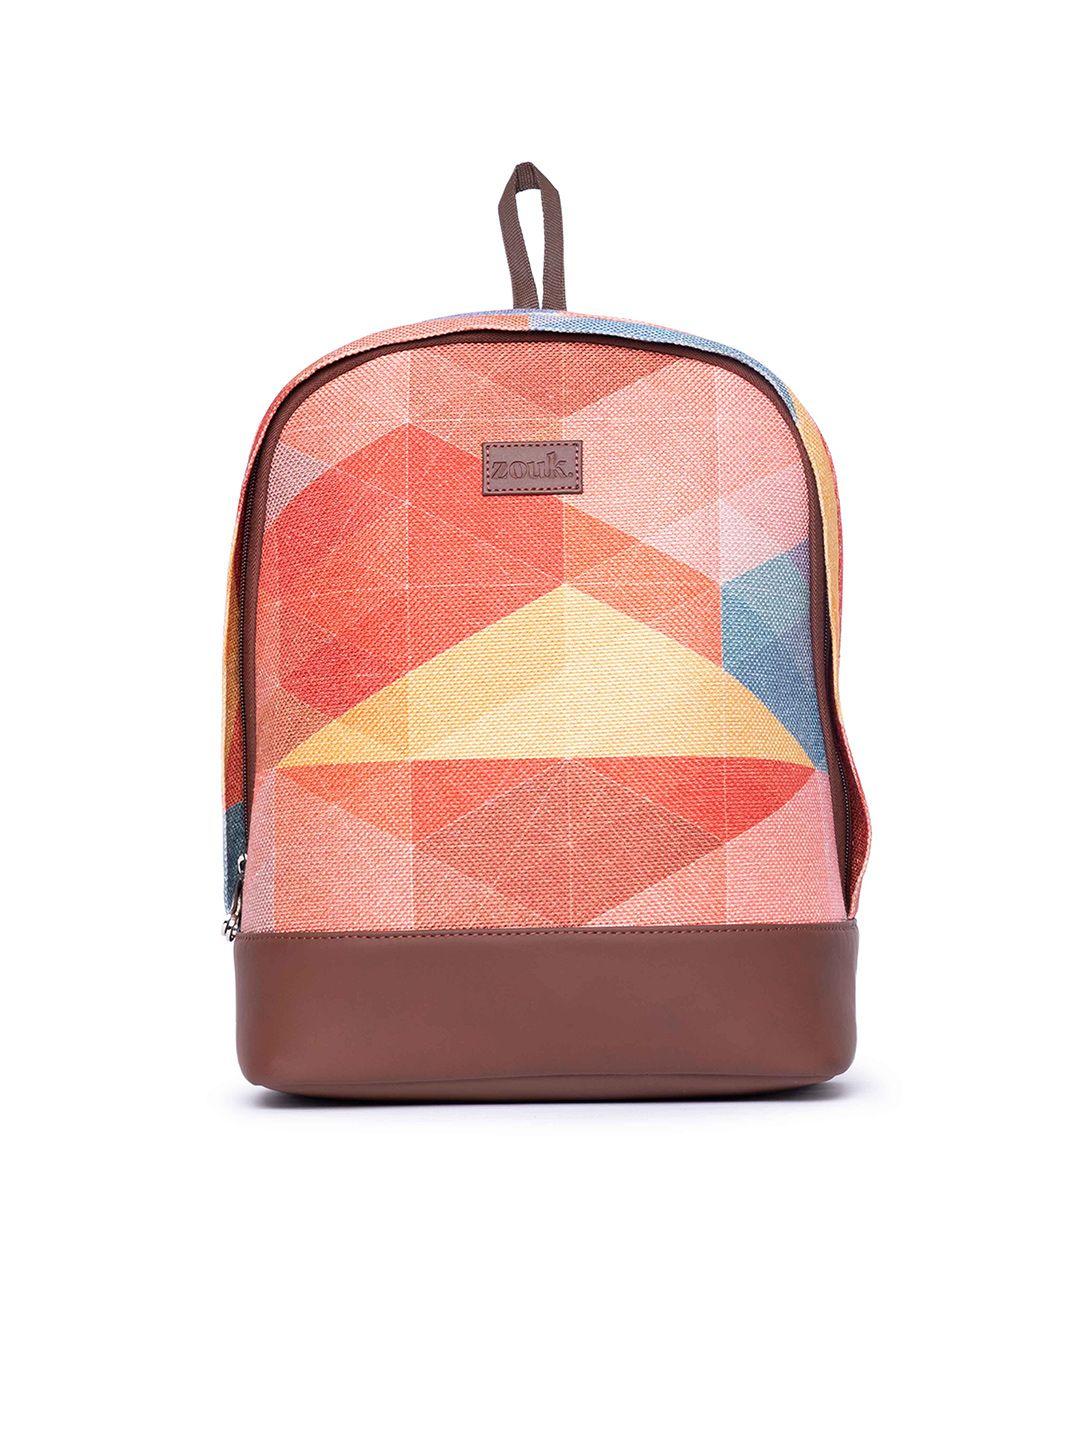 zouk geometric printed backpack